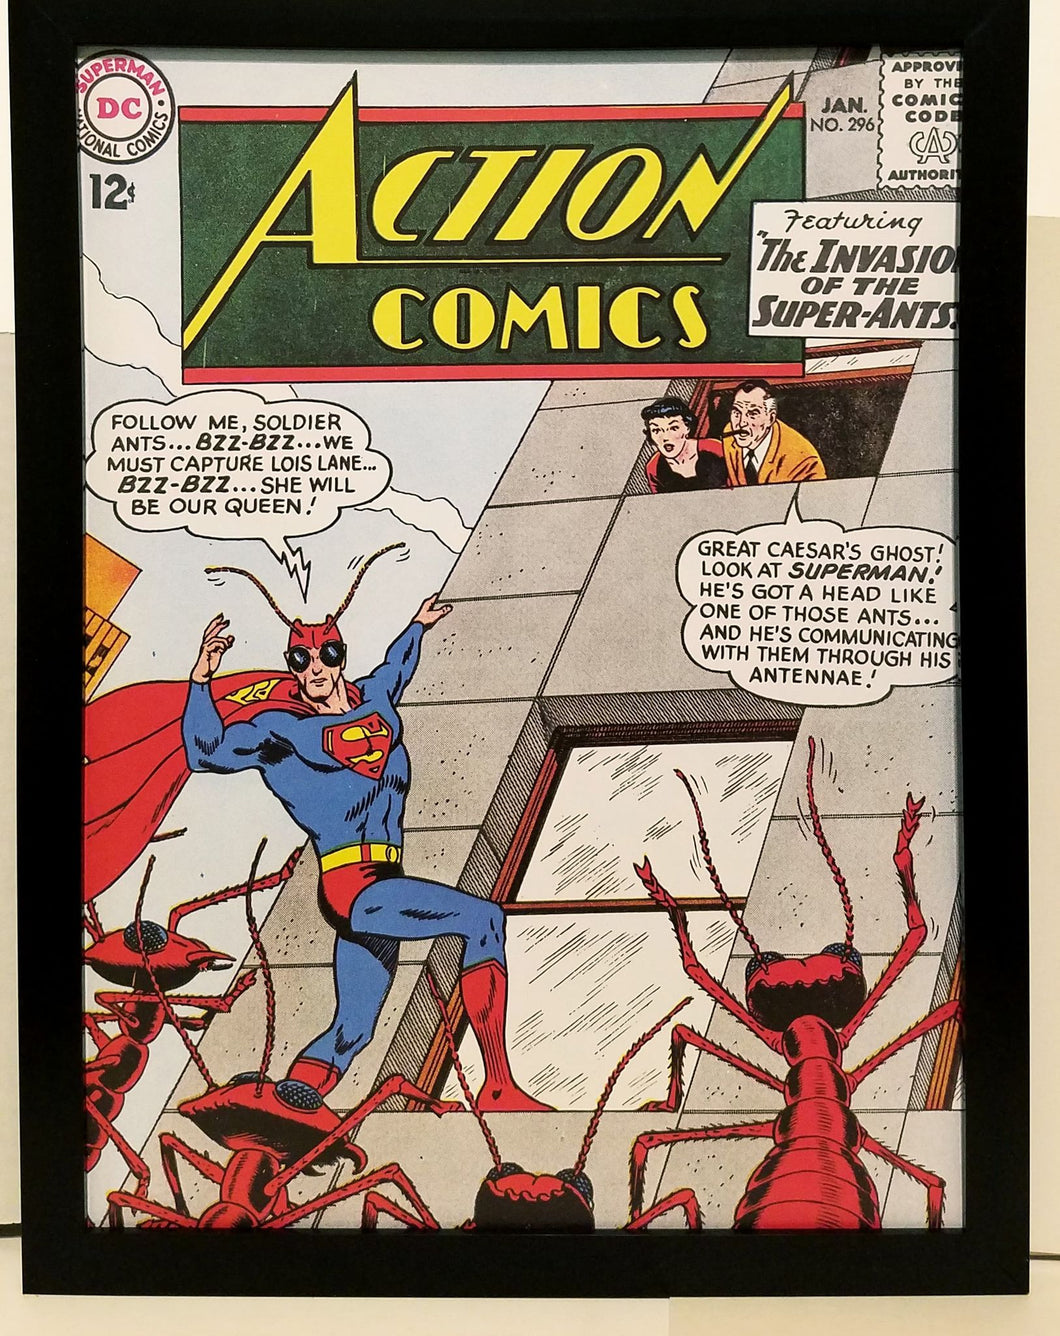 Action Comics #296 Superman 9x12 FRAMED Vintage 1963 DC Comics Art Print Poster